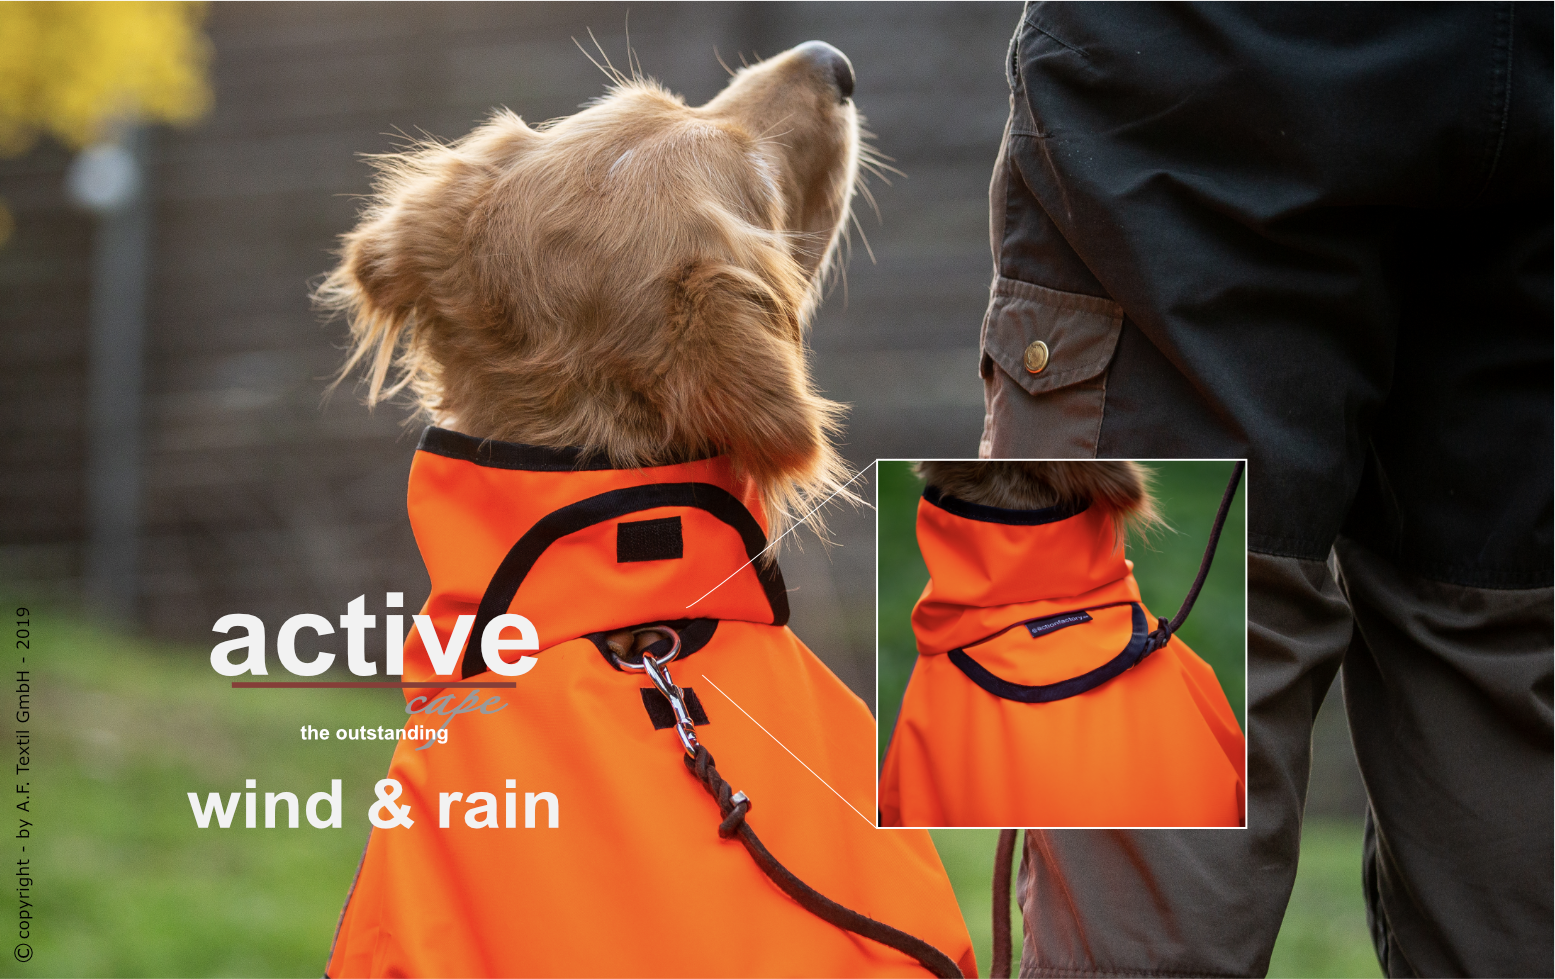 Active cape Wind & Rain orange Mini